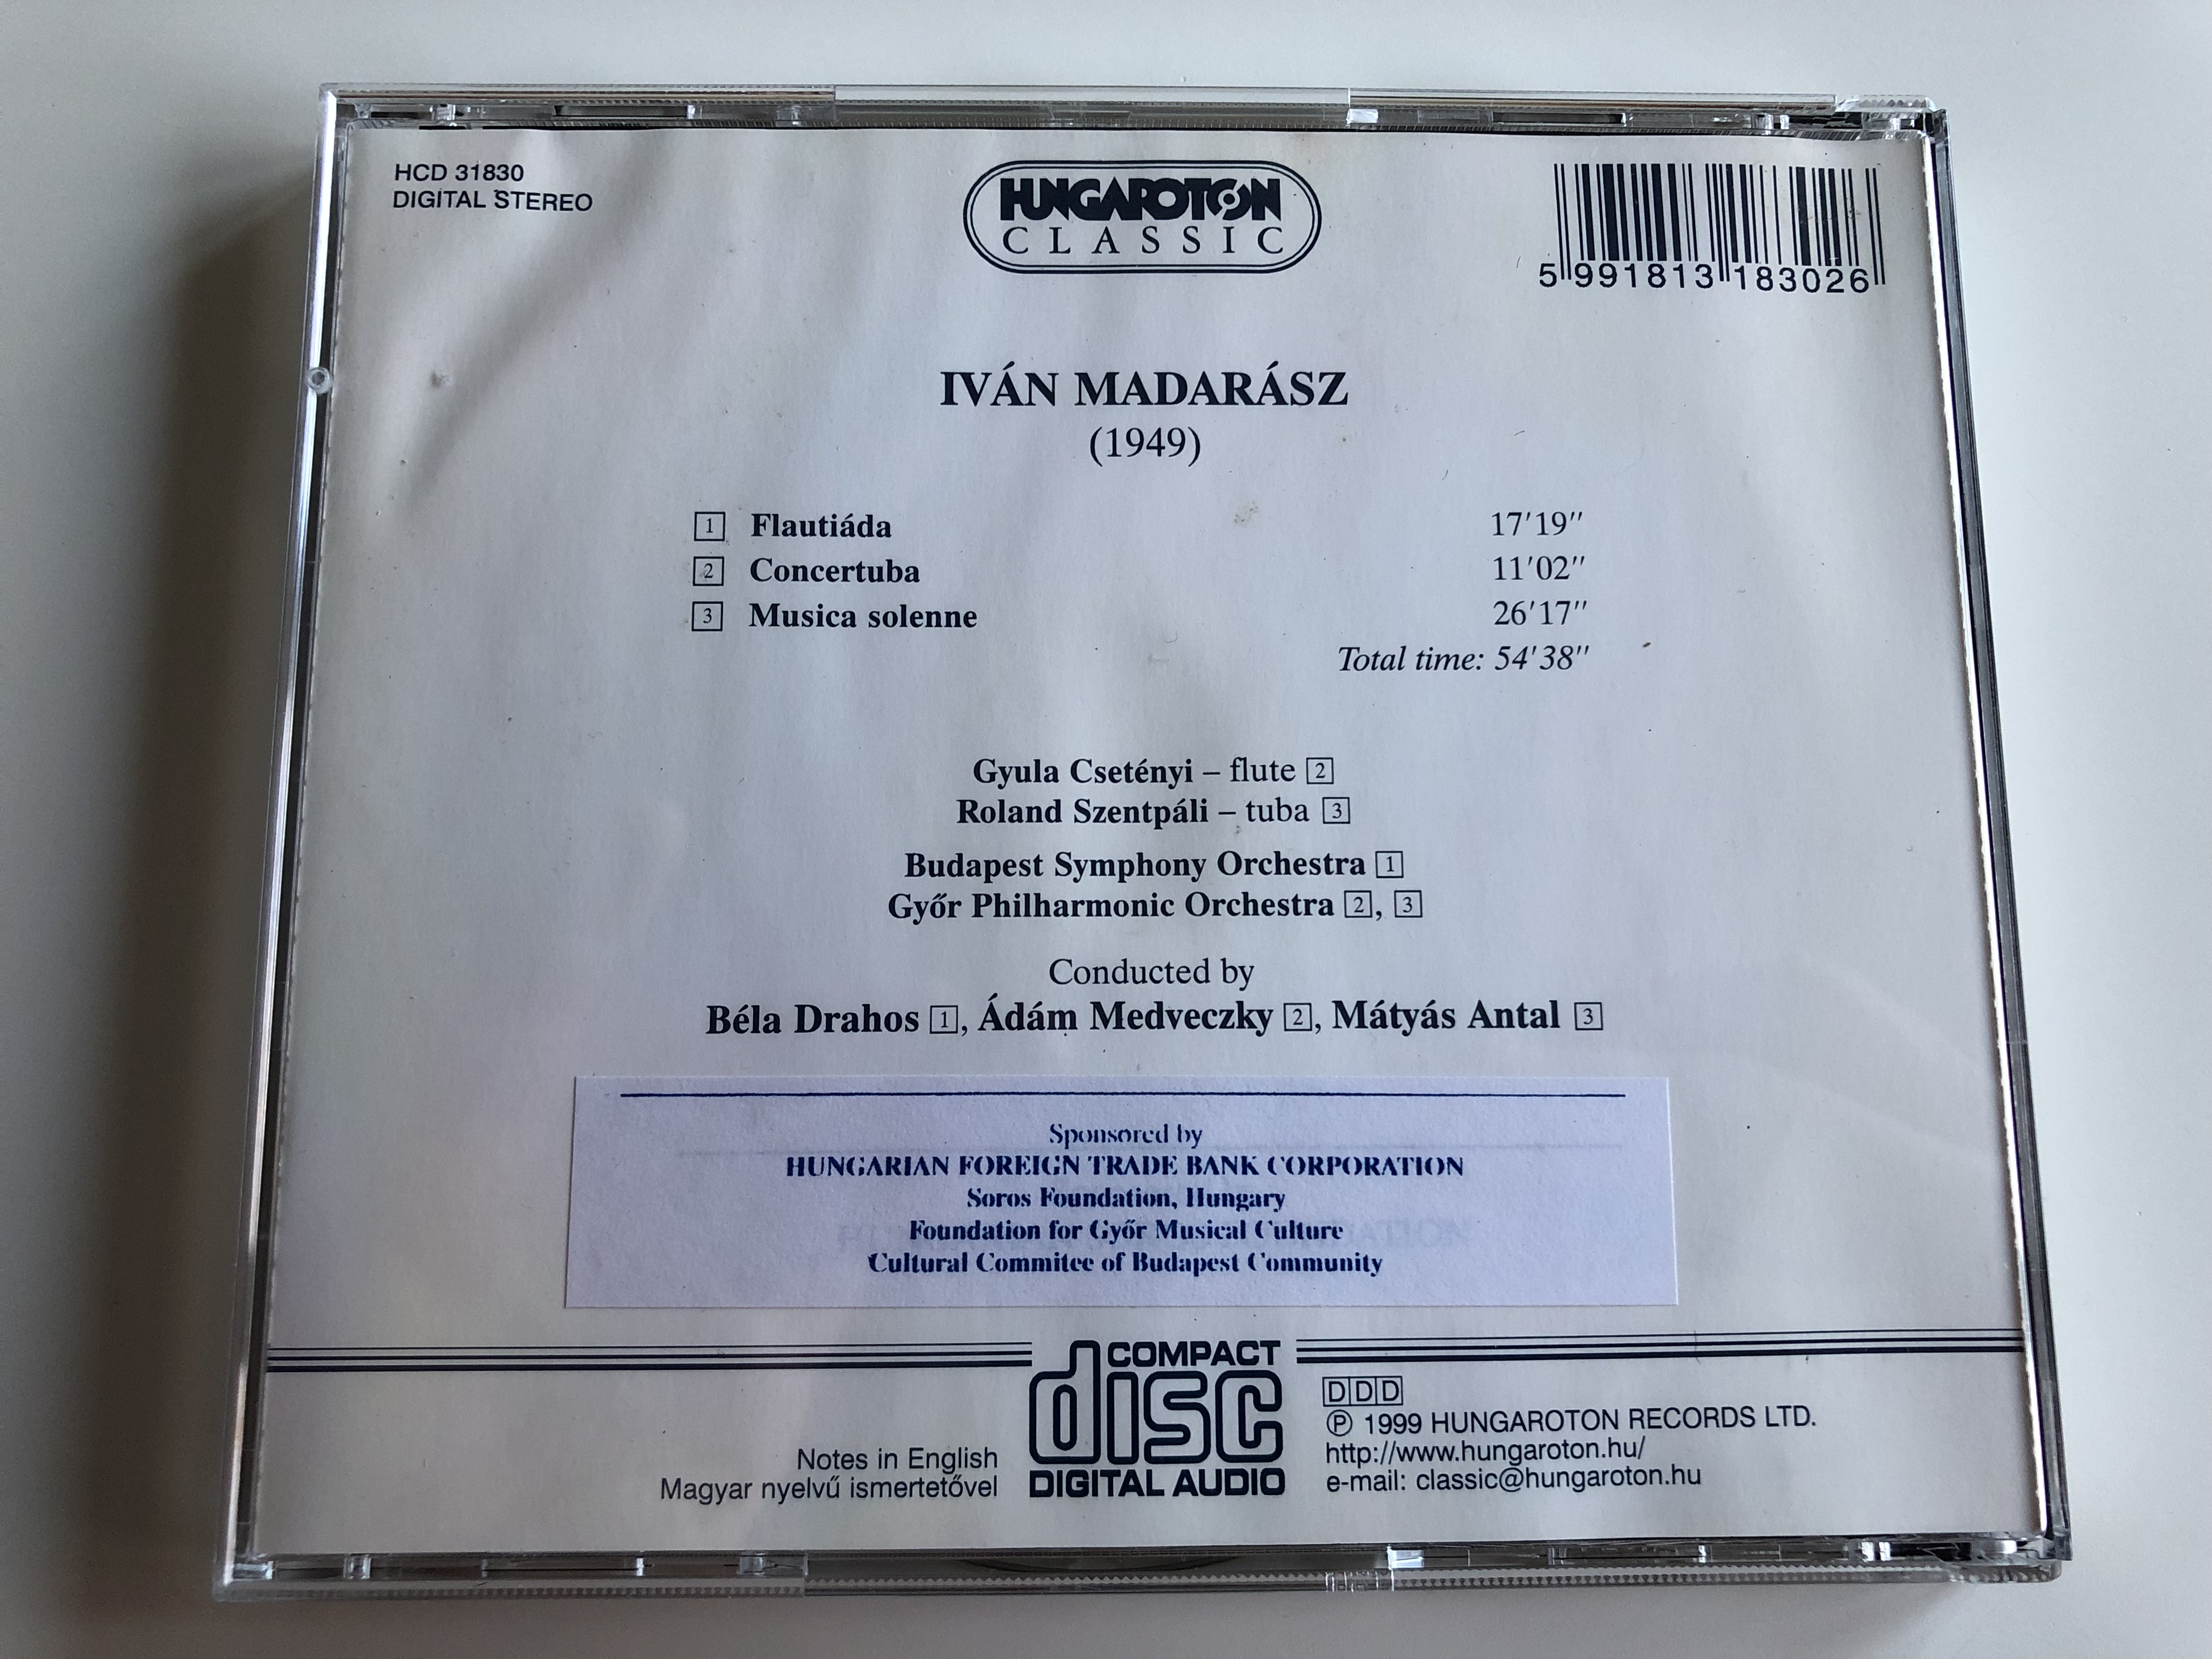 Ivan Madarasz - Flautiada, Concertuba, Musica Solenne / Hungaroton Classic  Audio CD 1999 Stereo / HCD 31830 - bibleinmylanguage